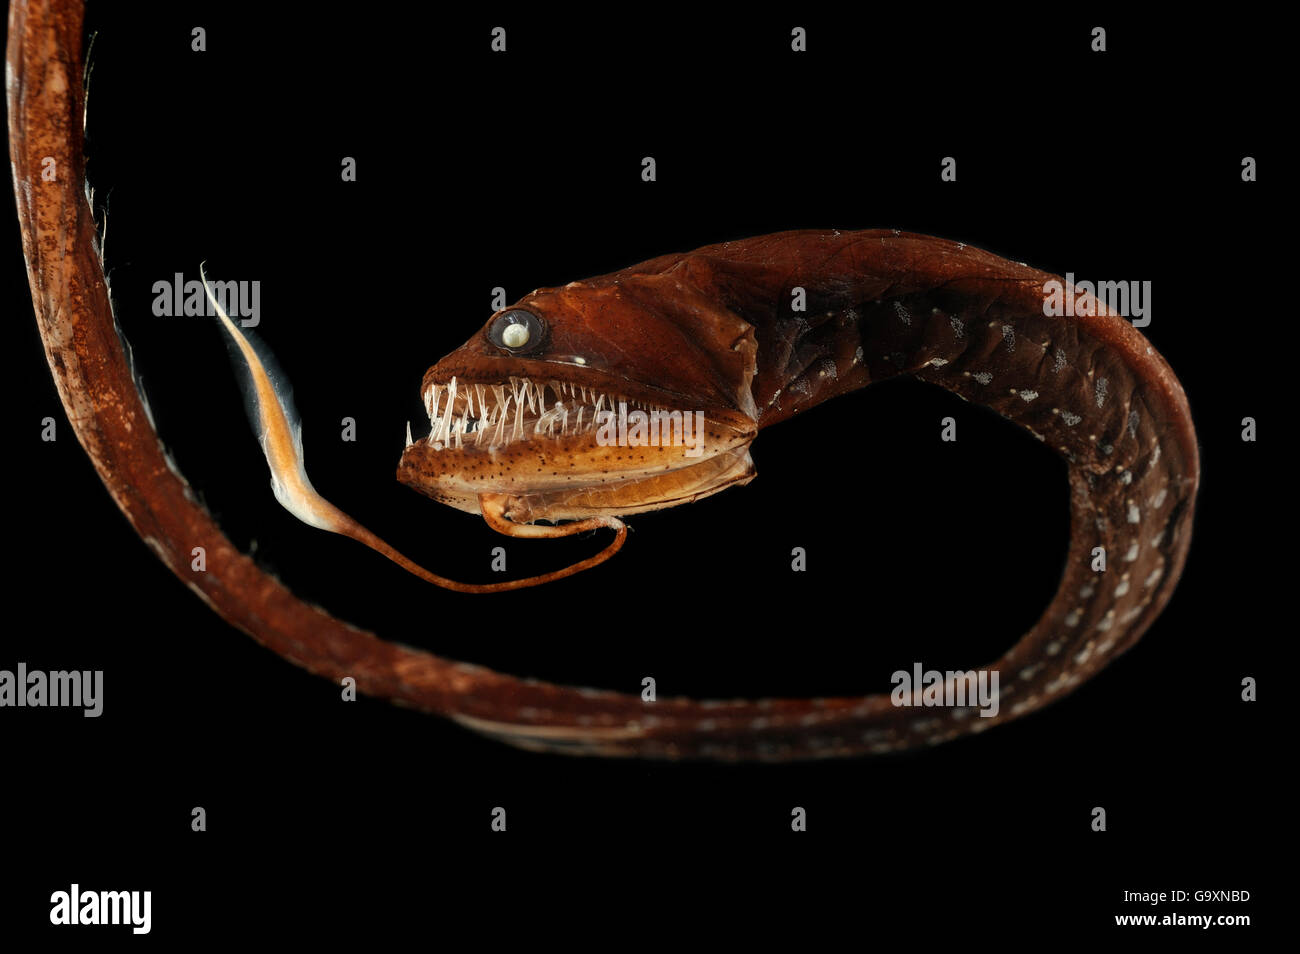 Ribbon sawtail fish (Idiacanthus fasciola) from Atlantic Ocean, at a depth of 800-1000m. Stock Photo